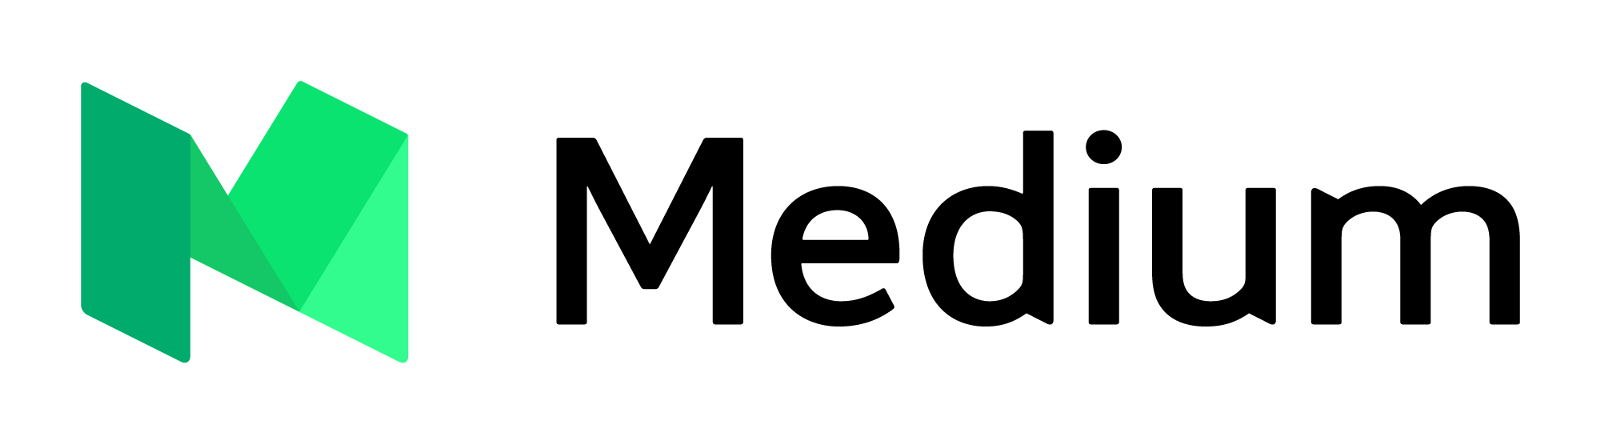 medium logo.png